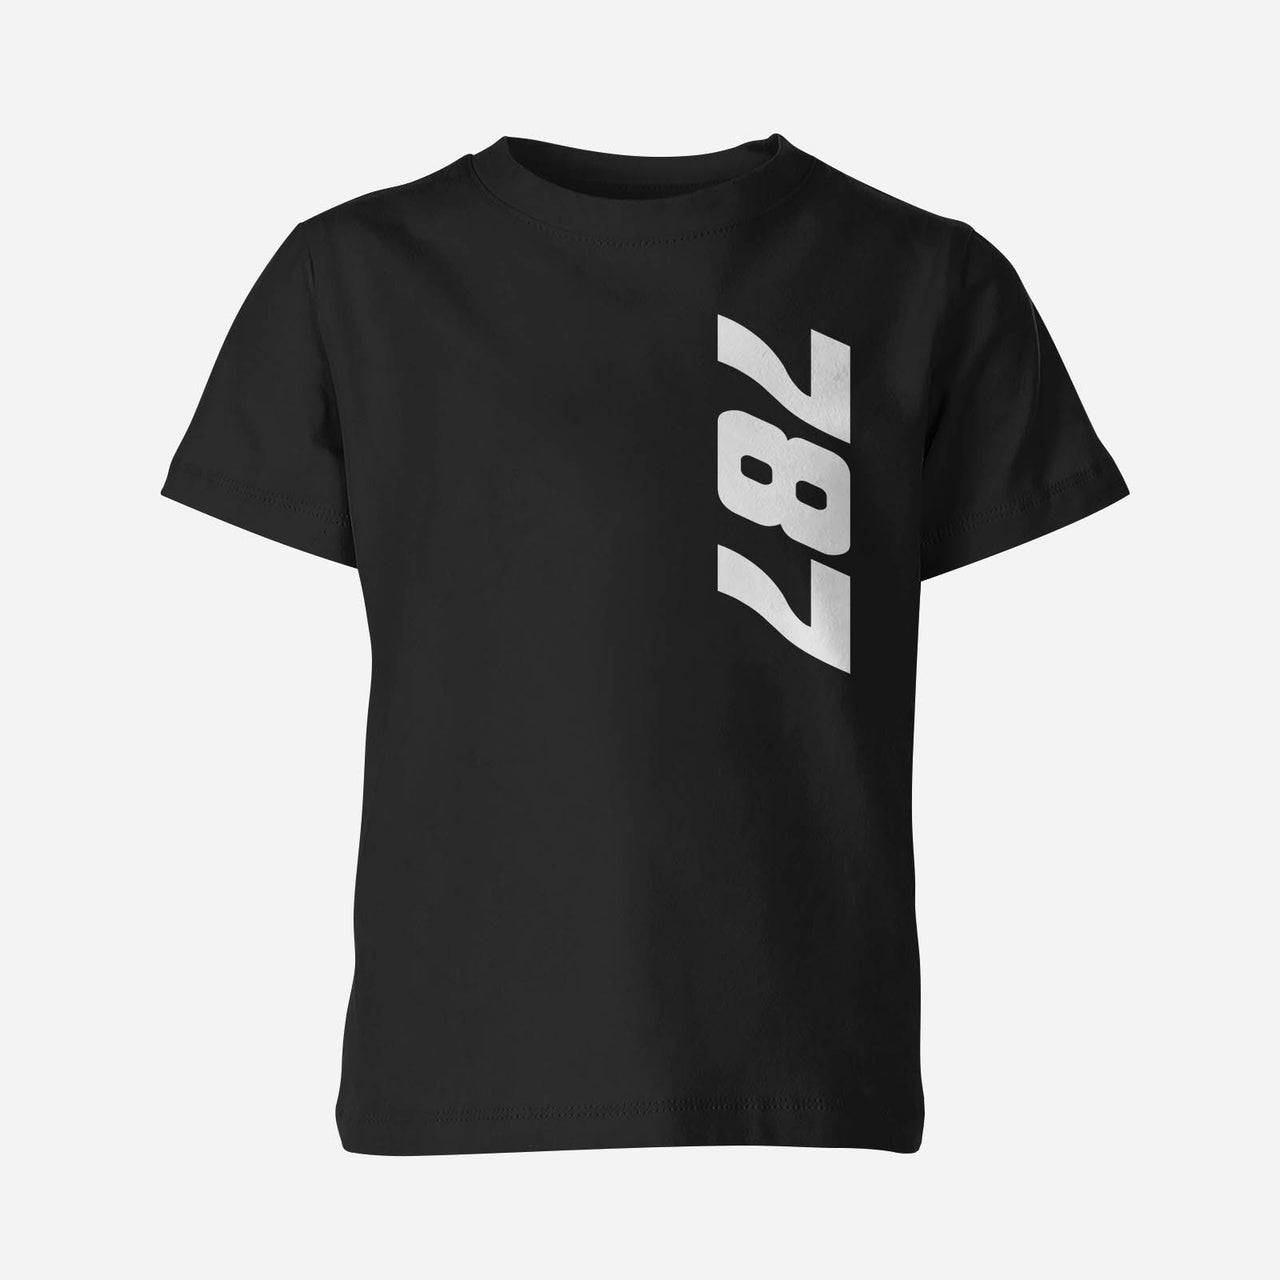 787 Side Text Designed Children T-Shirts